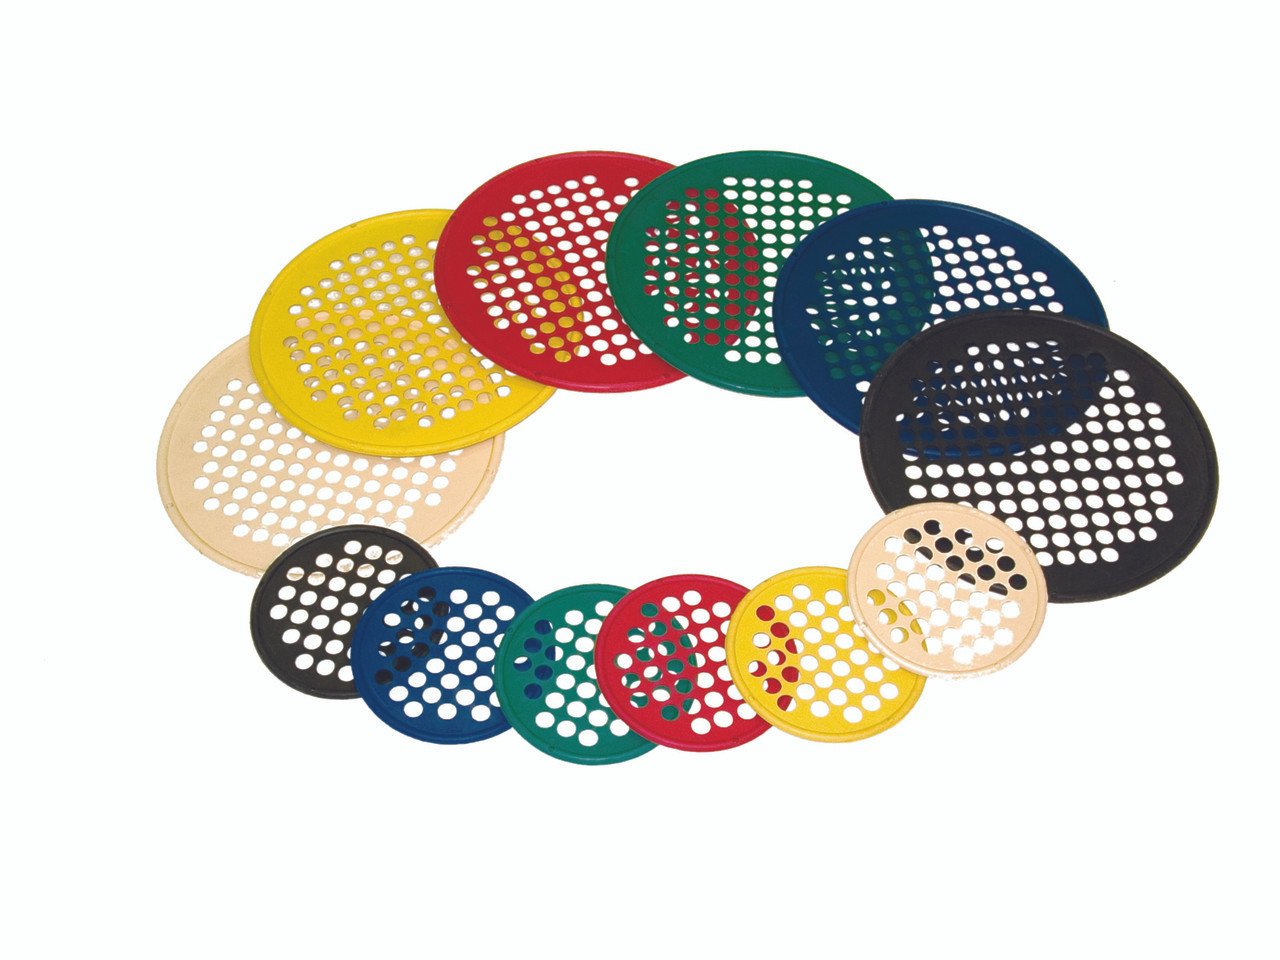 CanDo¨ Hand Exercise Web - Low Powder - 7" Diameter - 6-piece set (tan, yellow, red, green, blue, black)